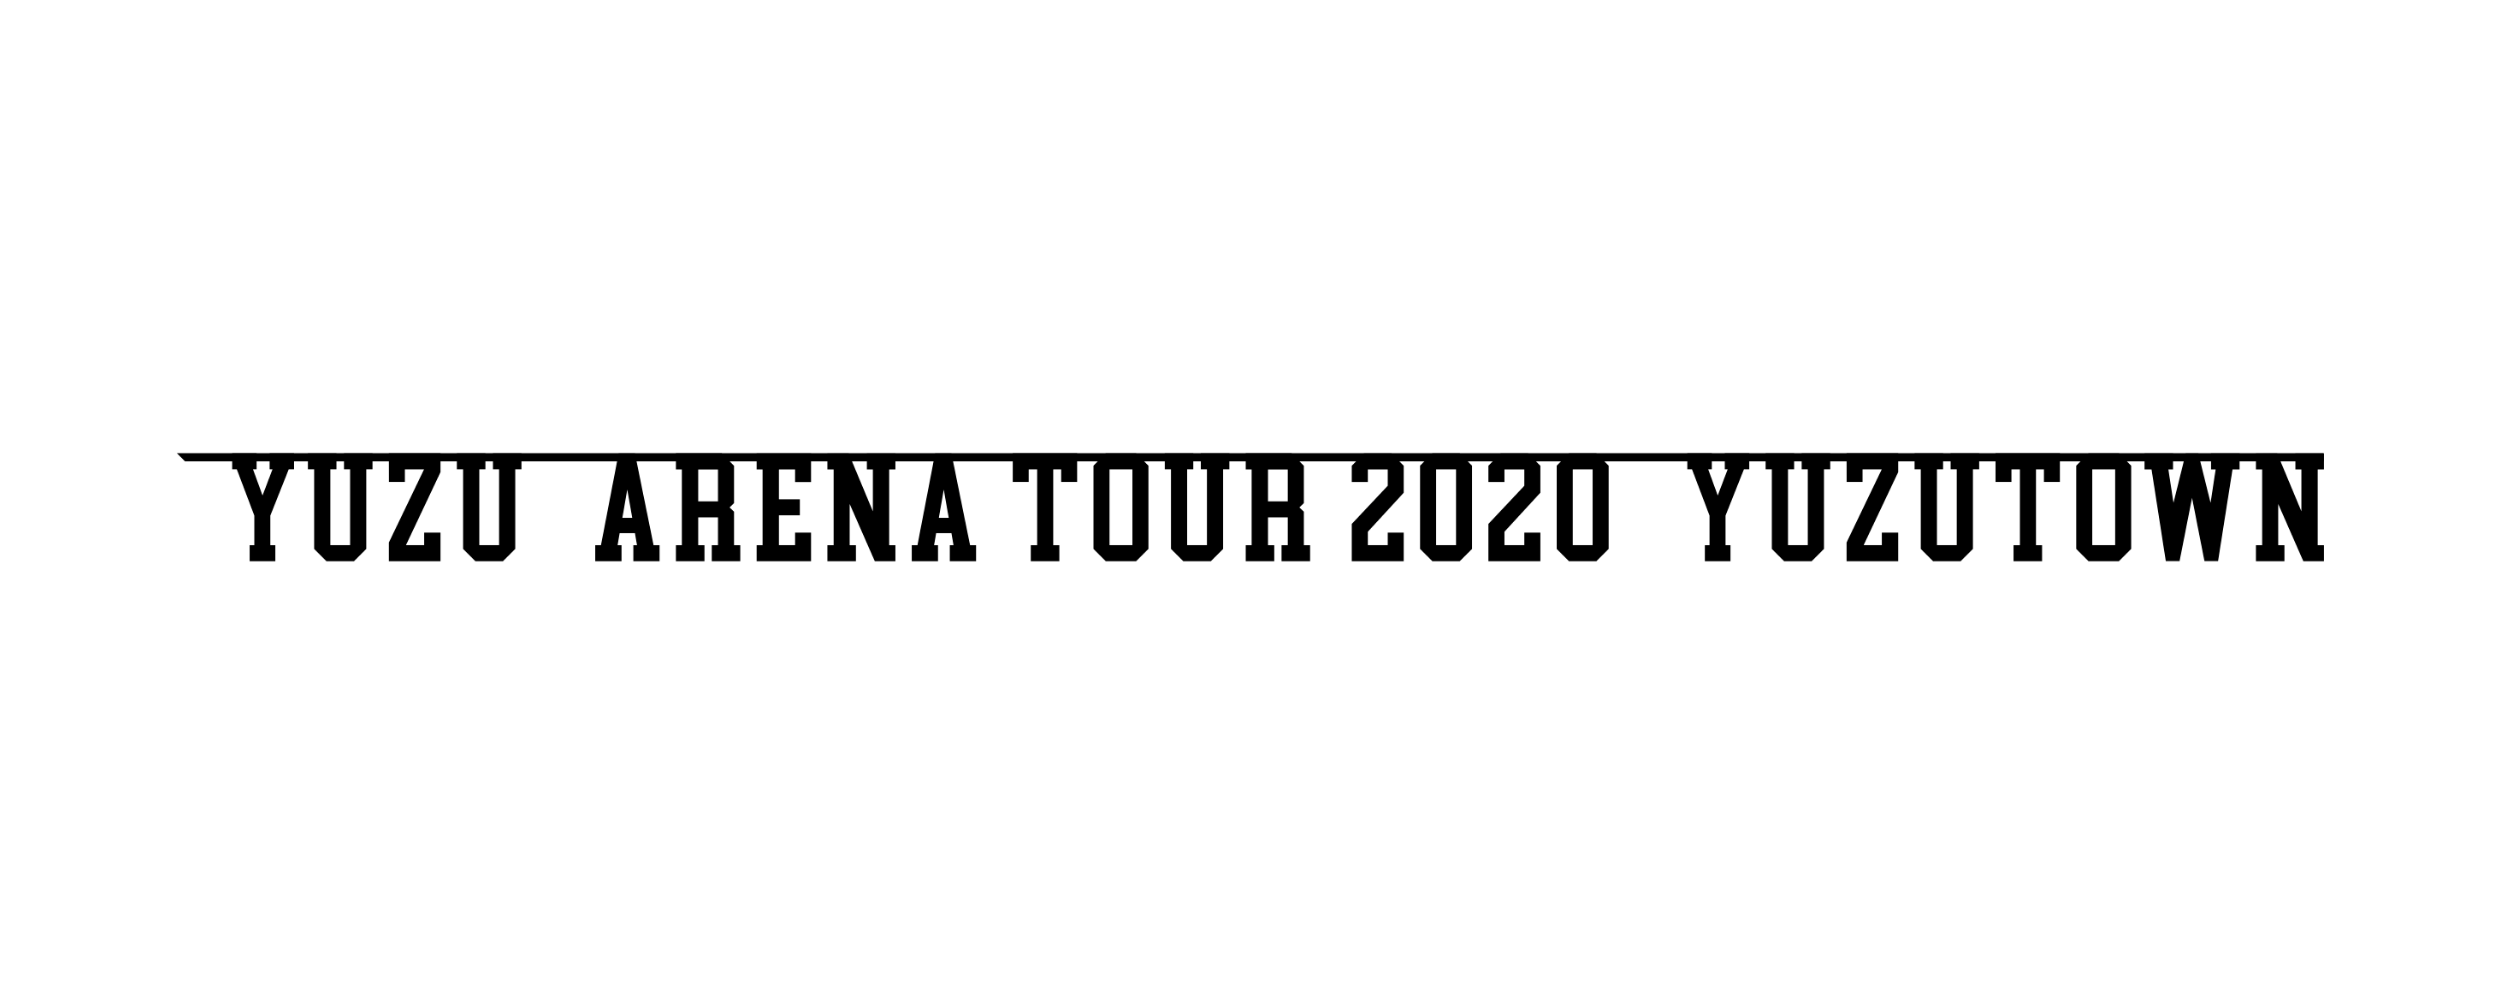 YUZU ARENA TOUR 2020 YUZUTOWN